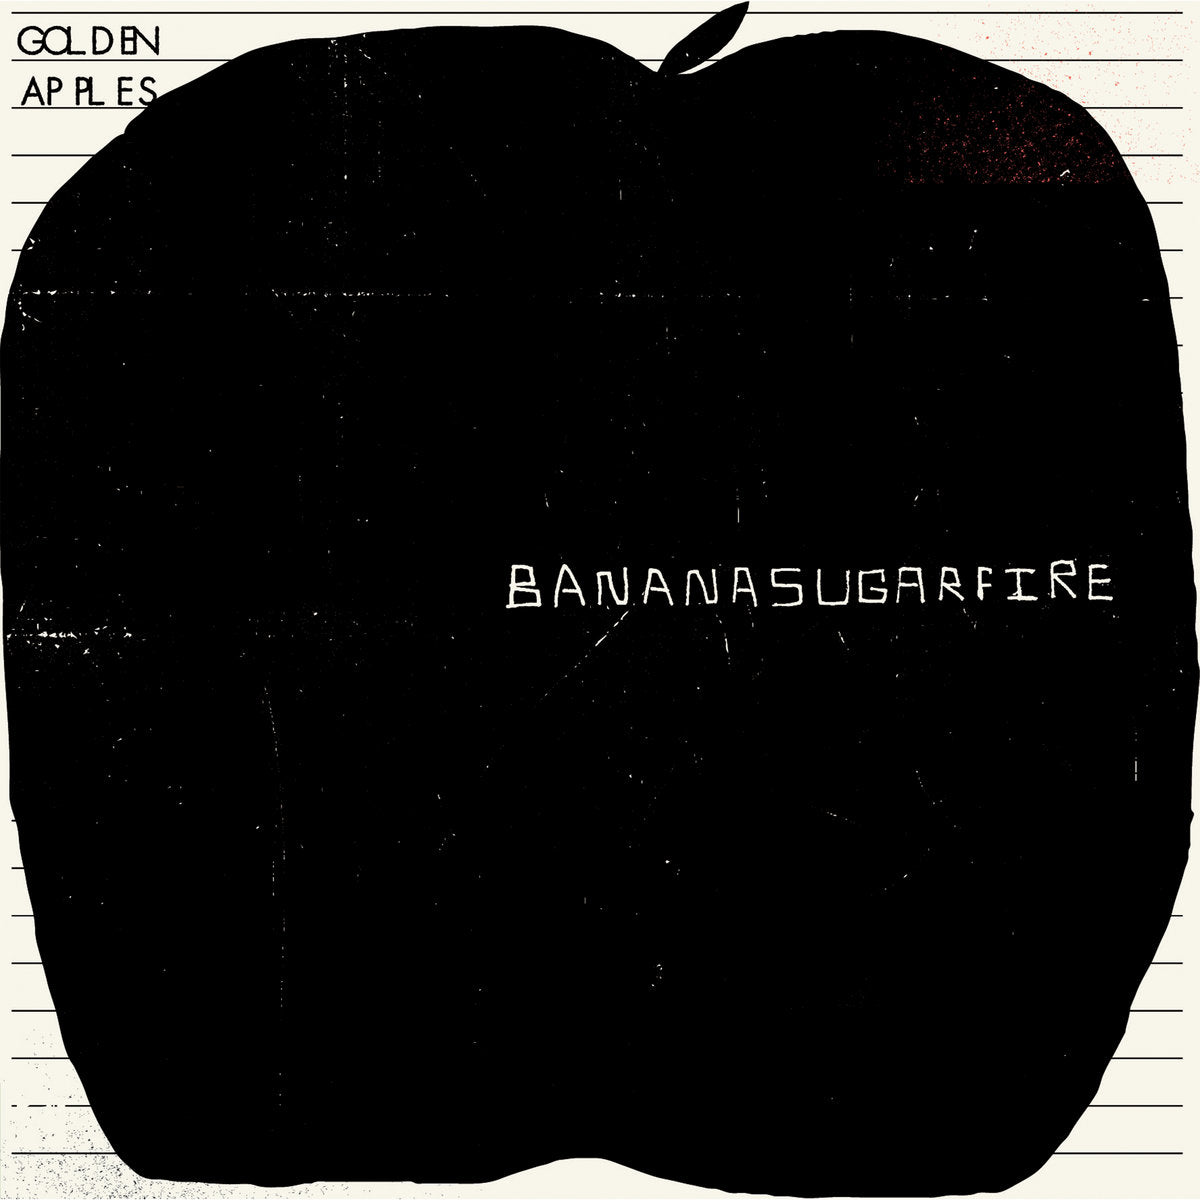 Golden Apples "Bananasugarfire" LP